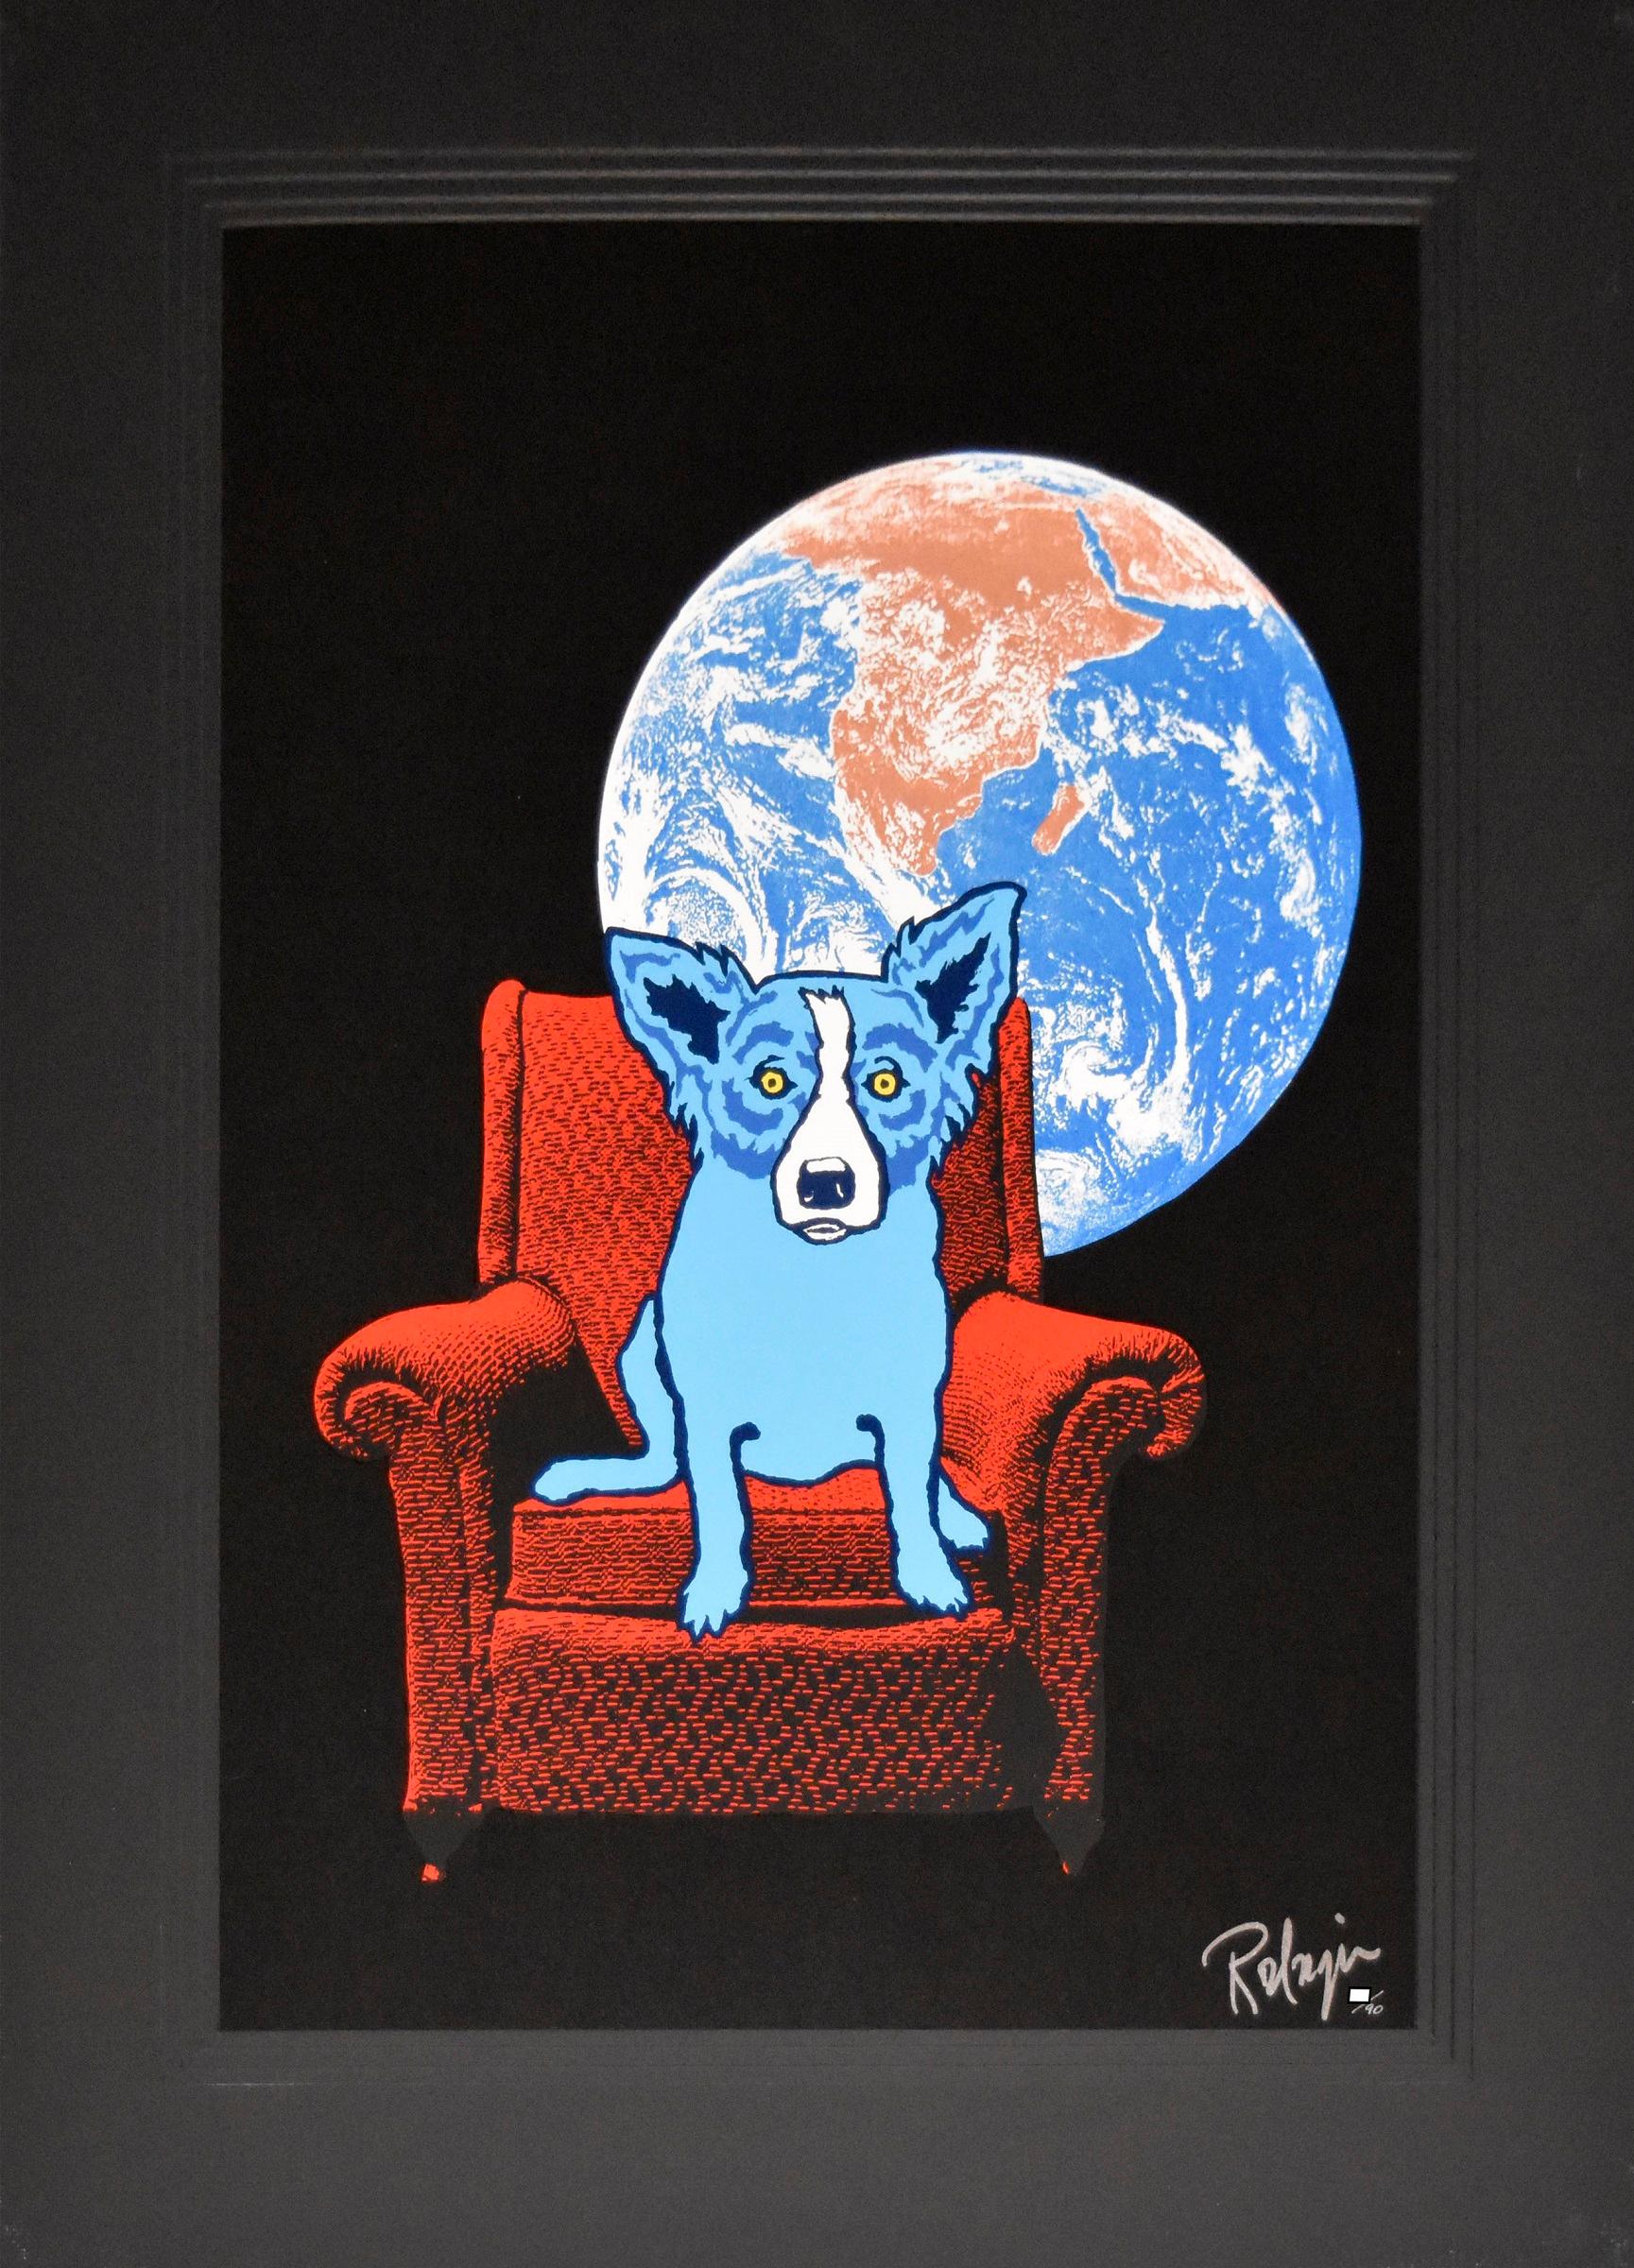 George Rodrigue Animal Print - Space Chair - Signed Silkscreen Print